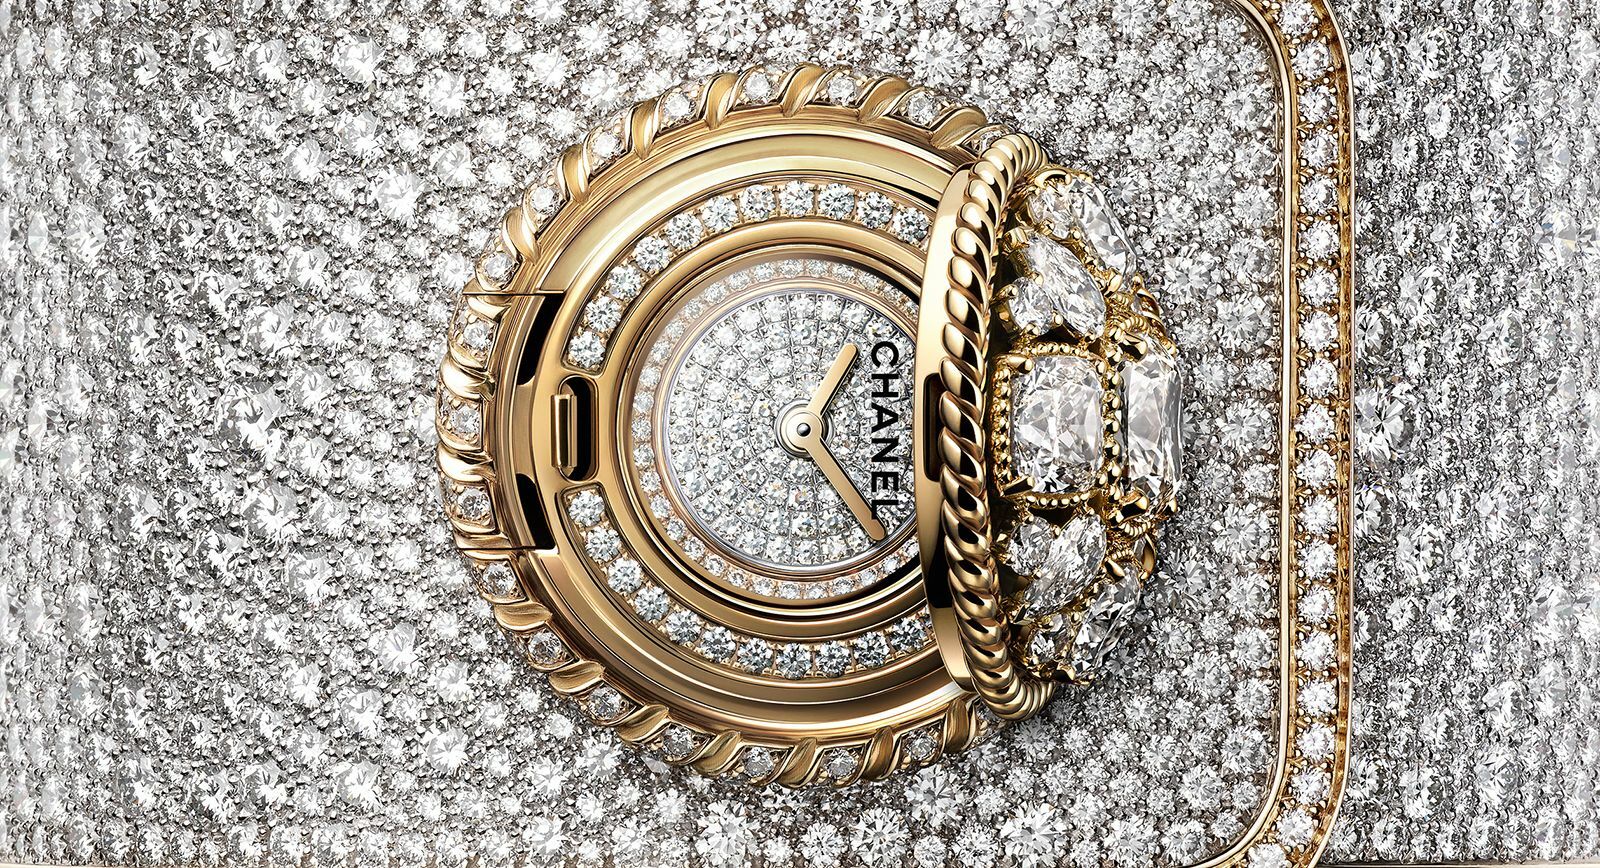 Chanel Mademoiselle Privé Bouton часы с секретом